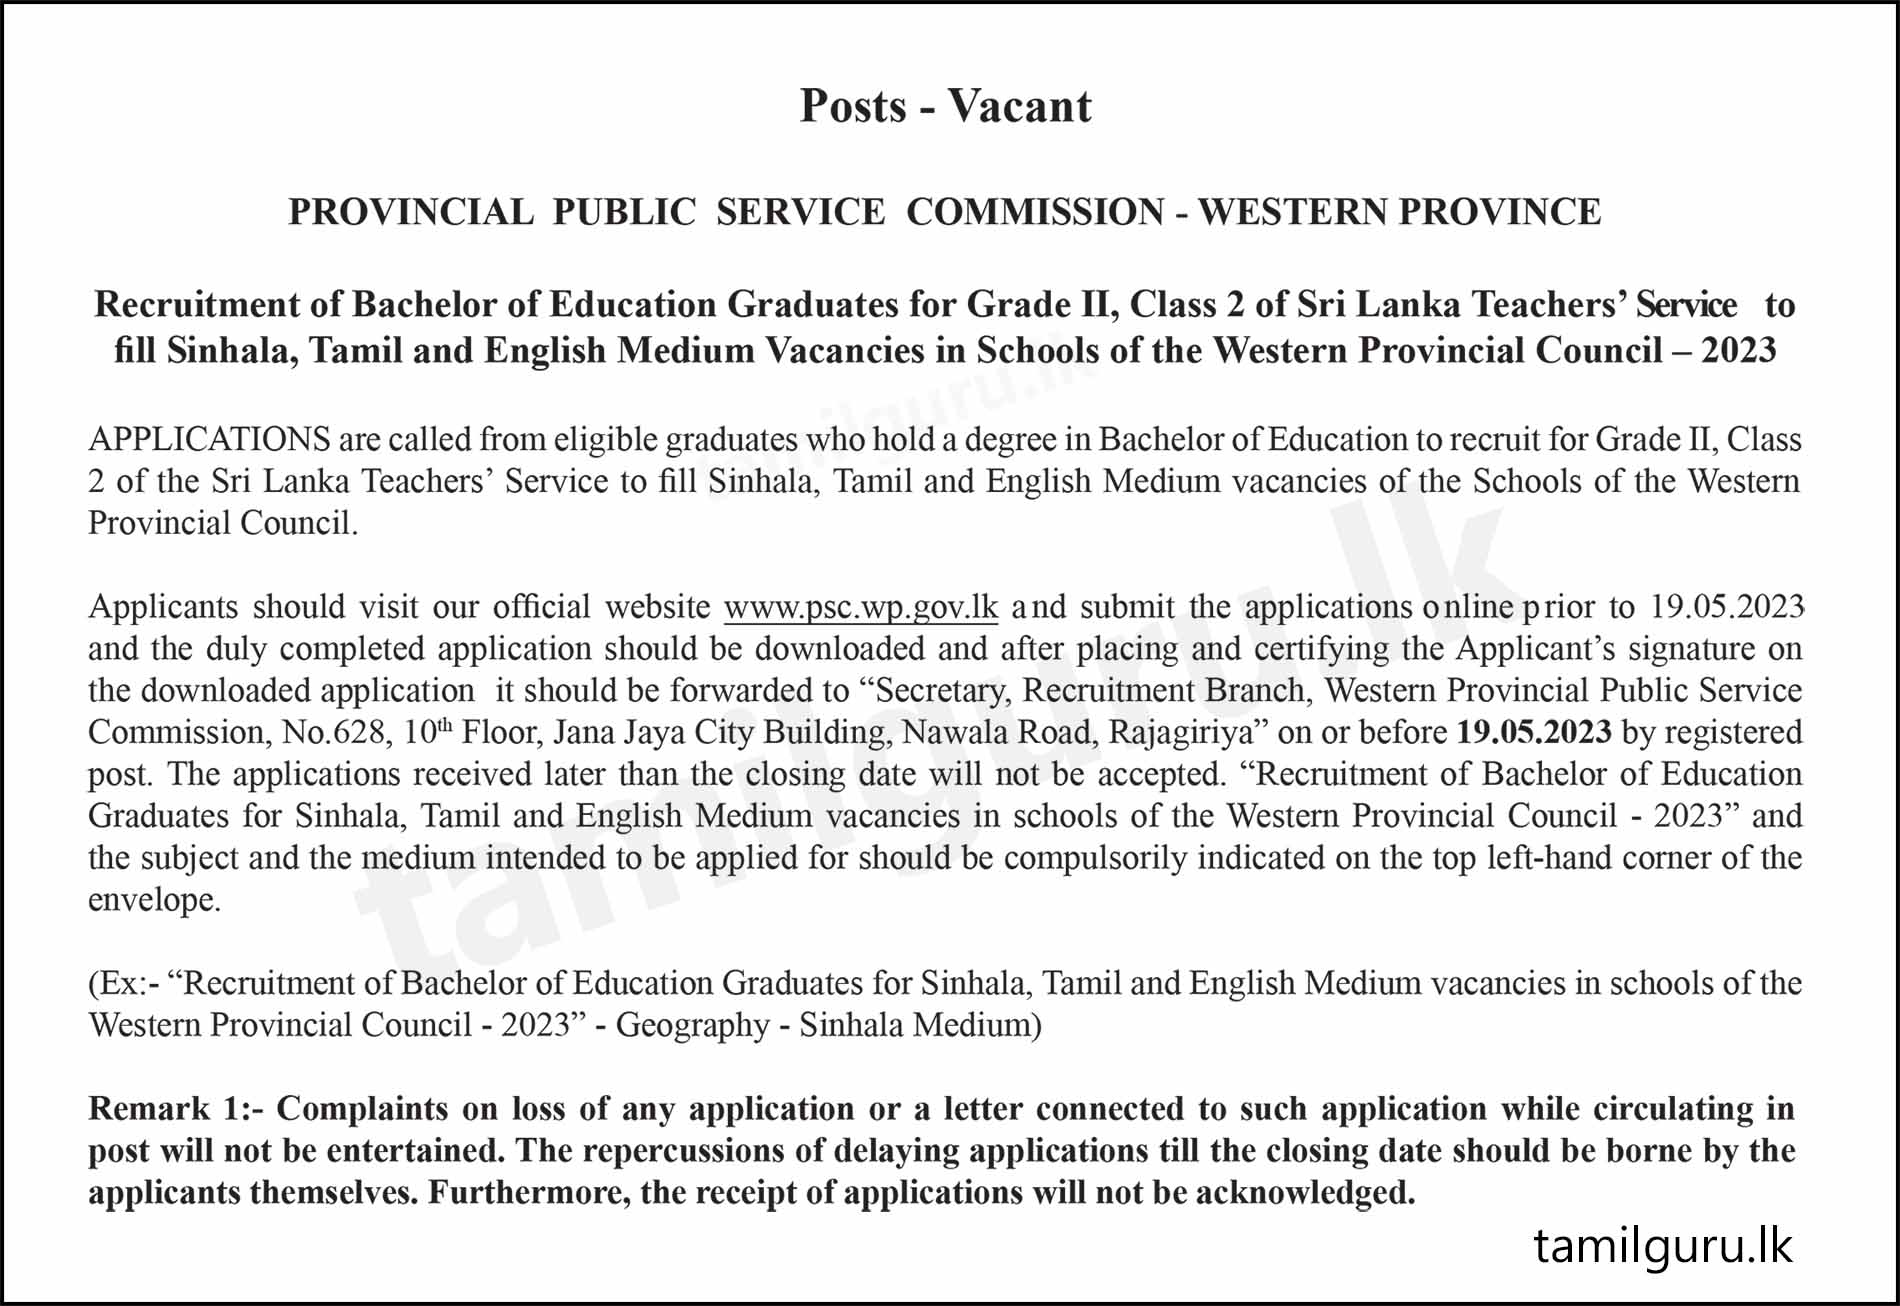 BEd Graduate Teaching Recruitment (Vacancies) 2023 - Western Province